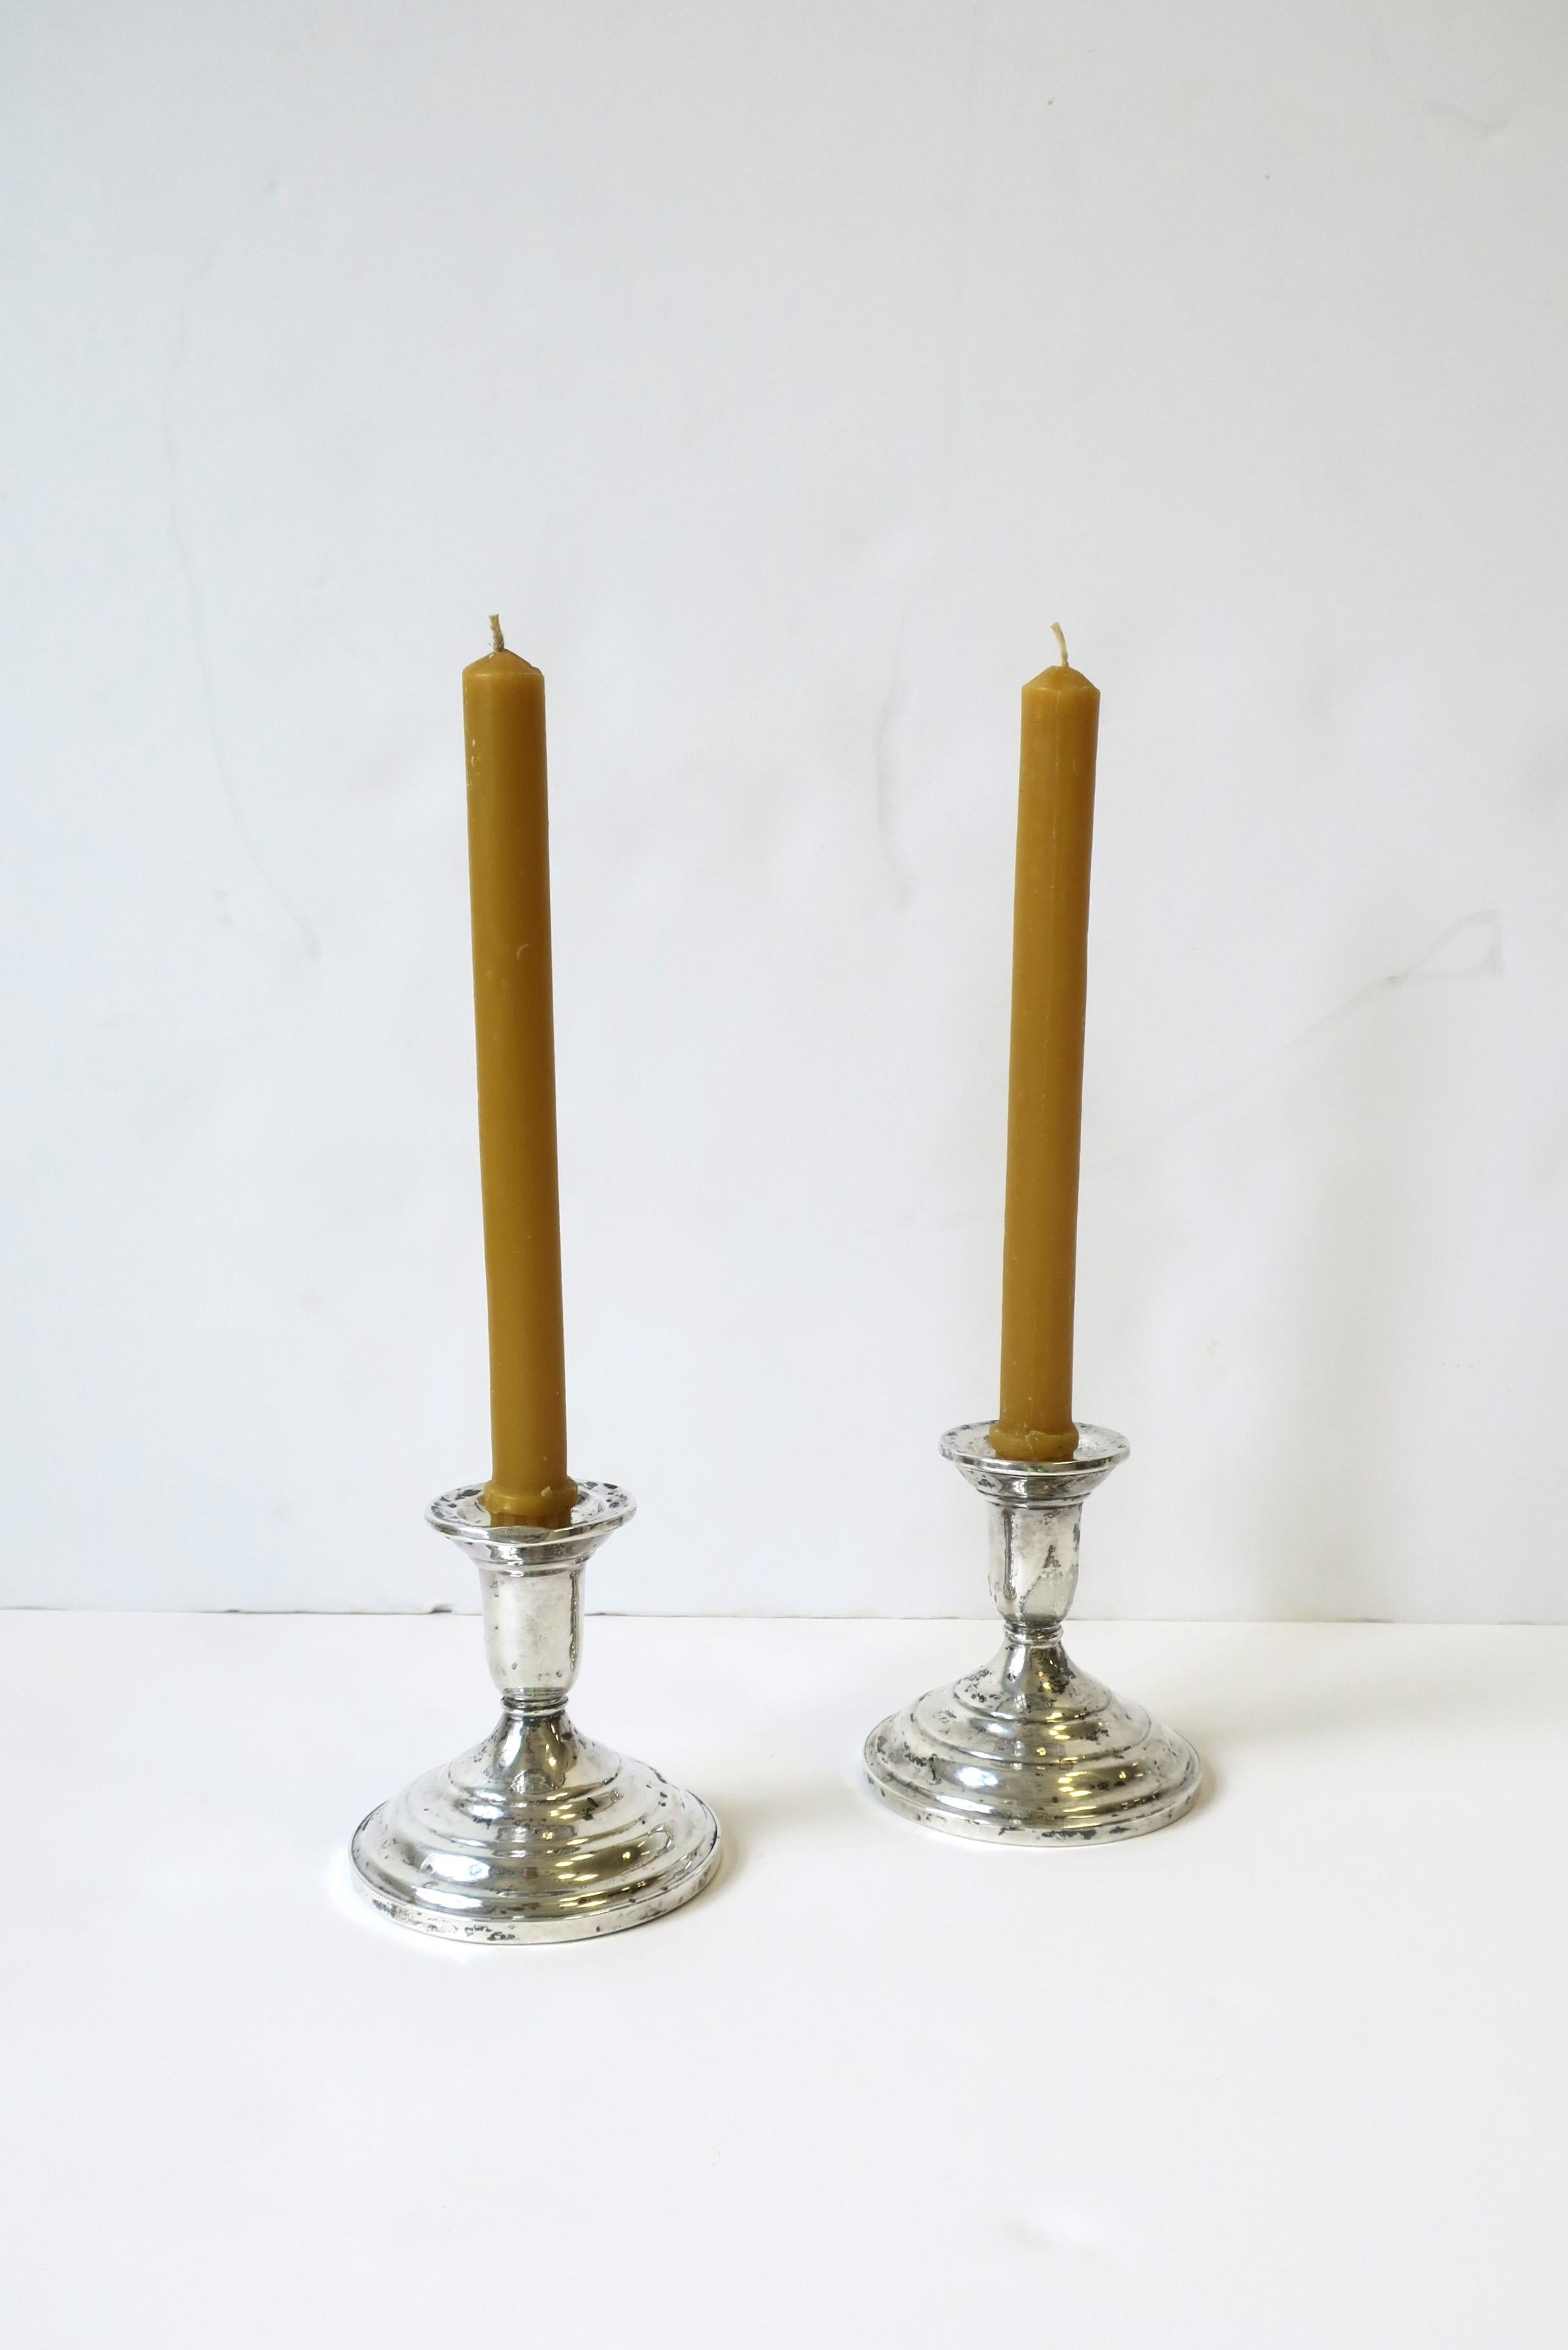 Kerzenstnder aus Sterlingsilber, Paar, ca. 1960er Jahre (20. Jahrhundert) im Angebot